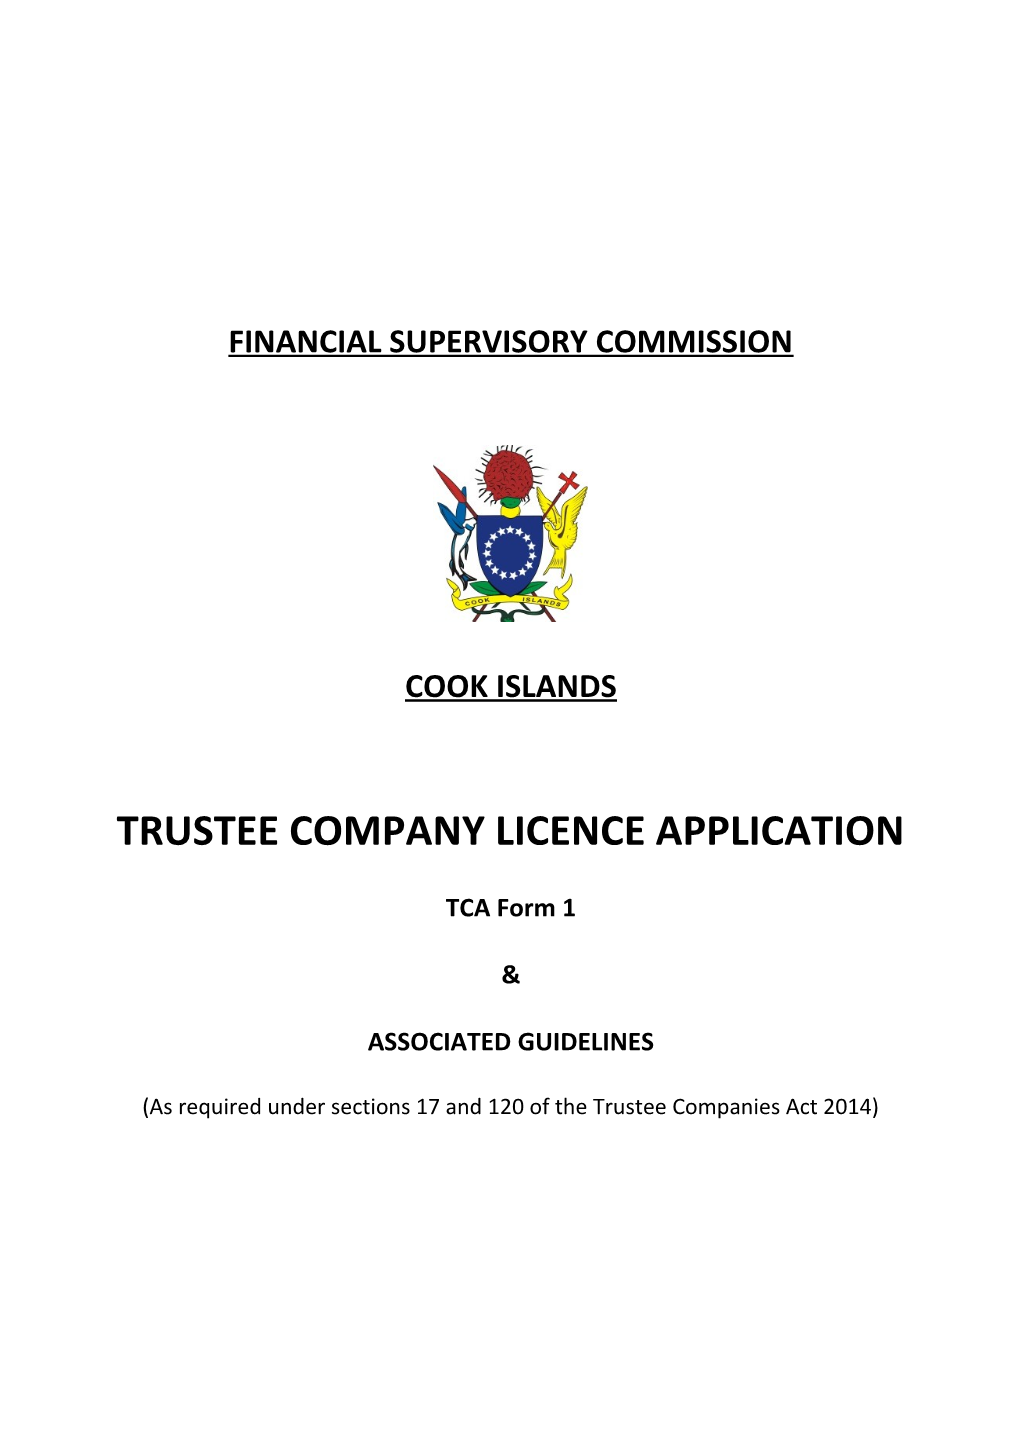 Trustee Company Licence Application